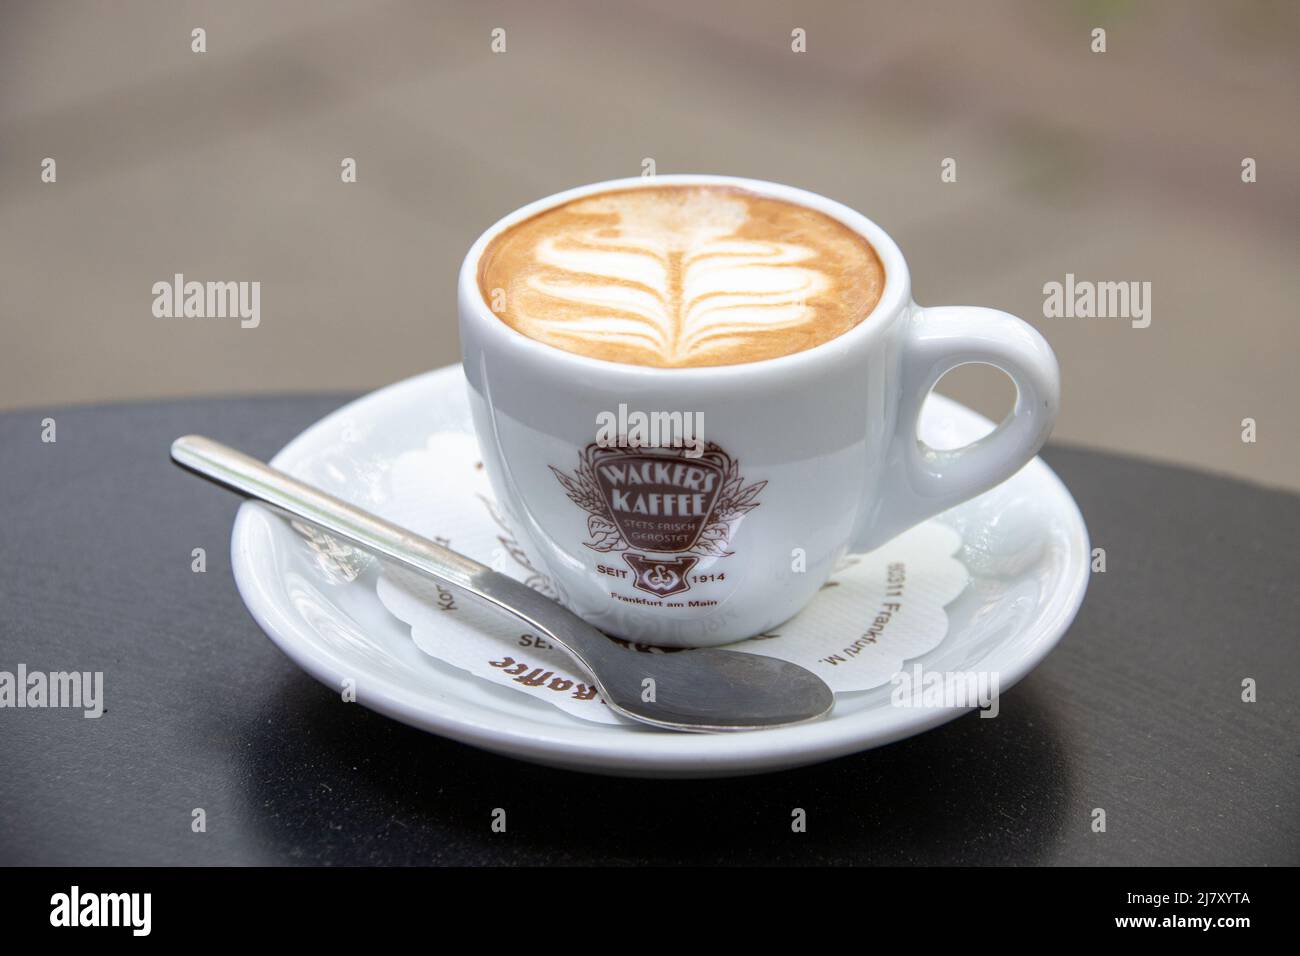 Espresso machiatto im Wackers Kaffee, Frankfurt, Deutschland Stockfoto